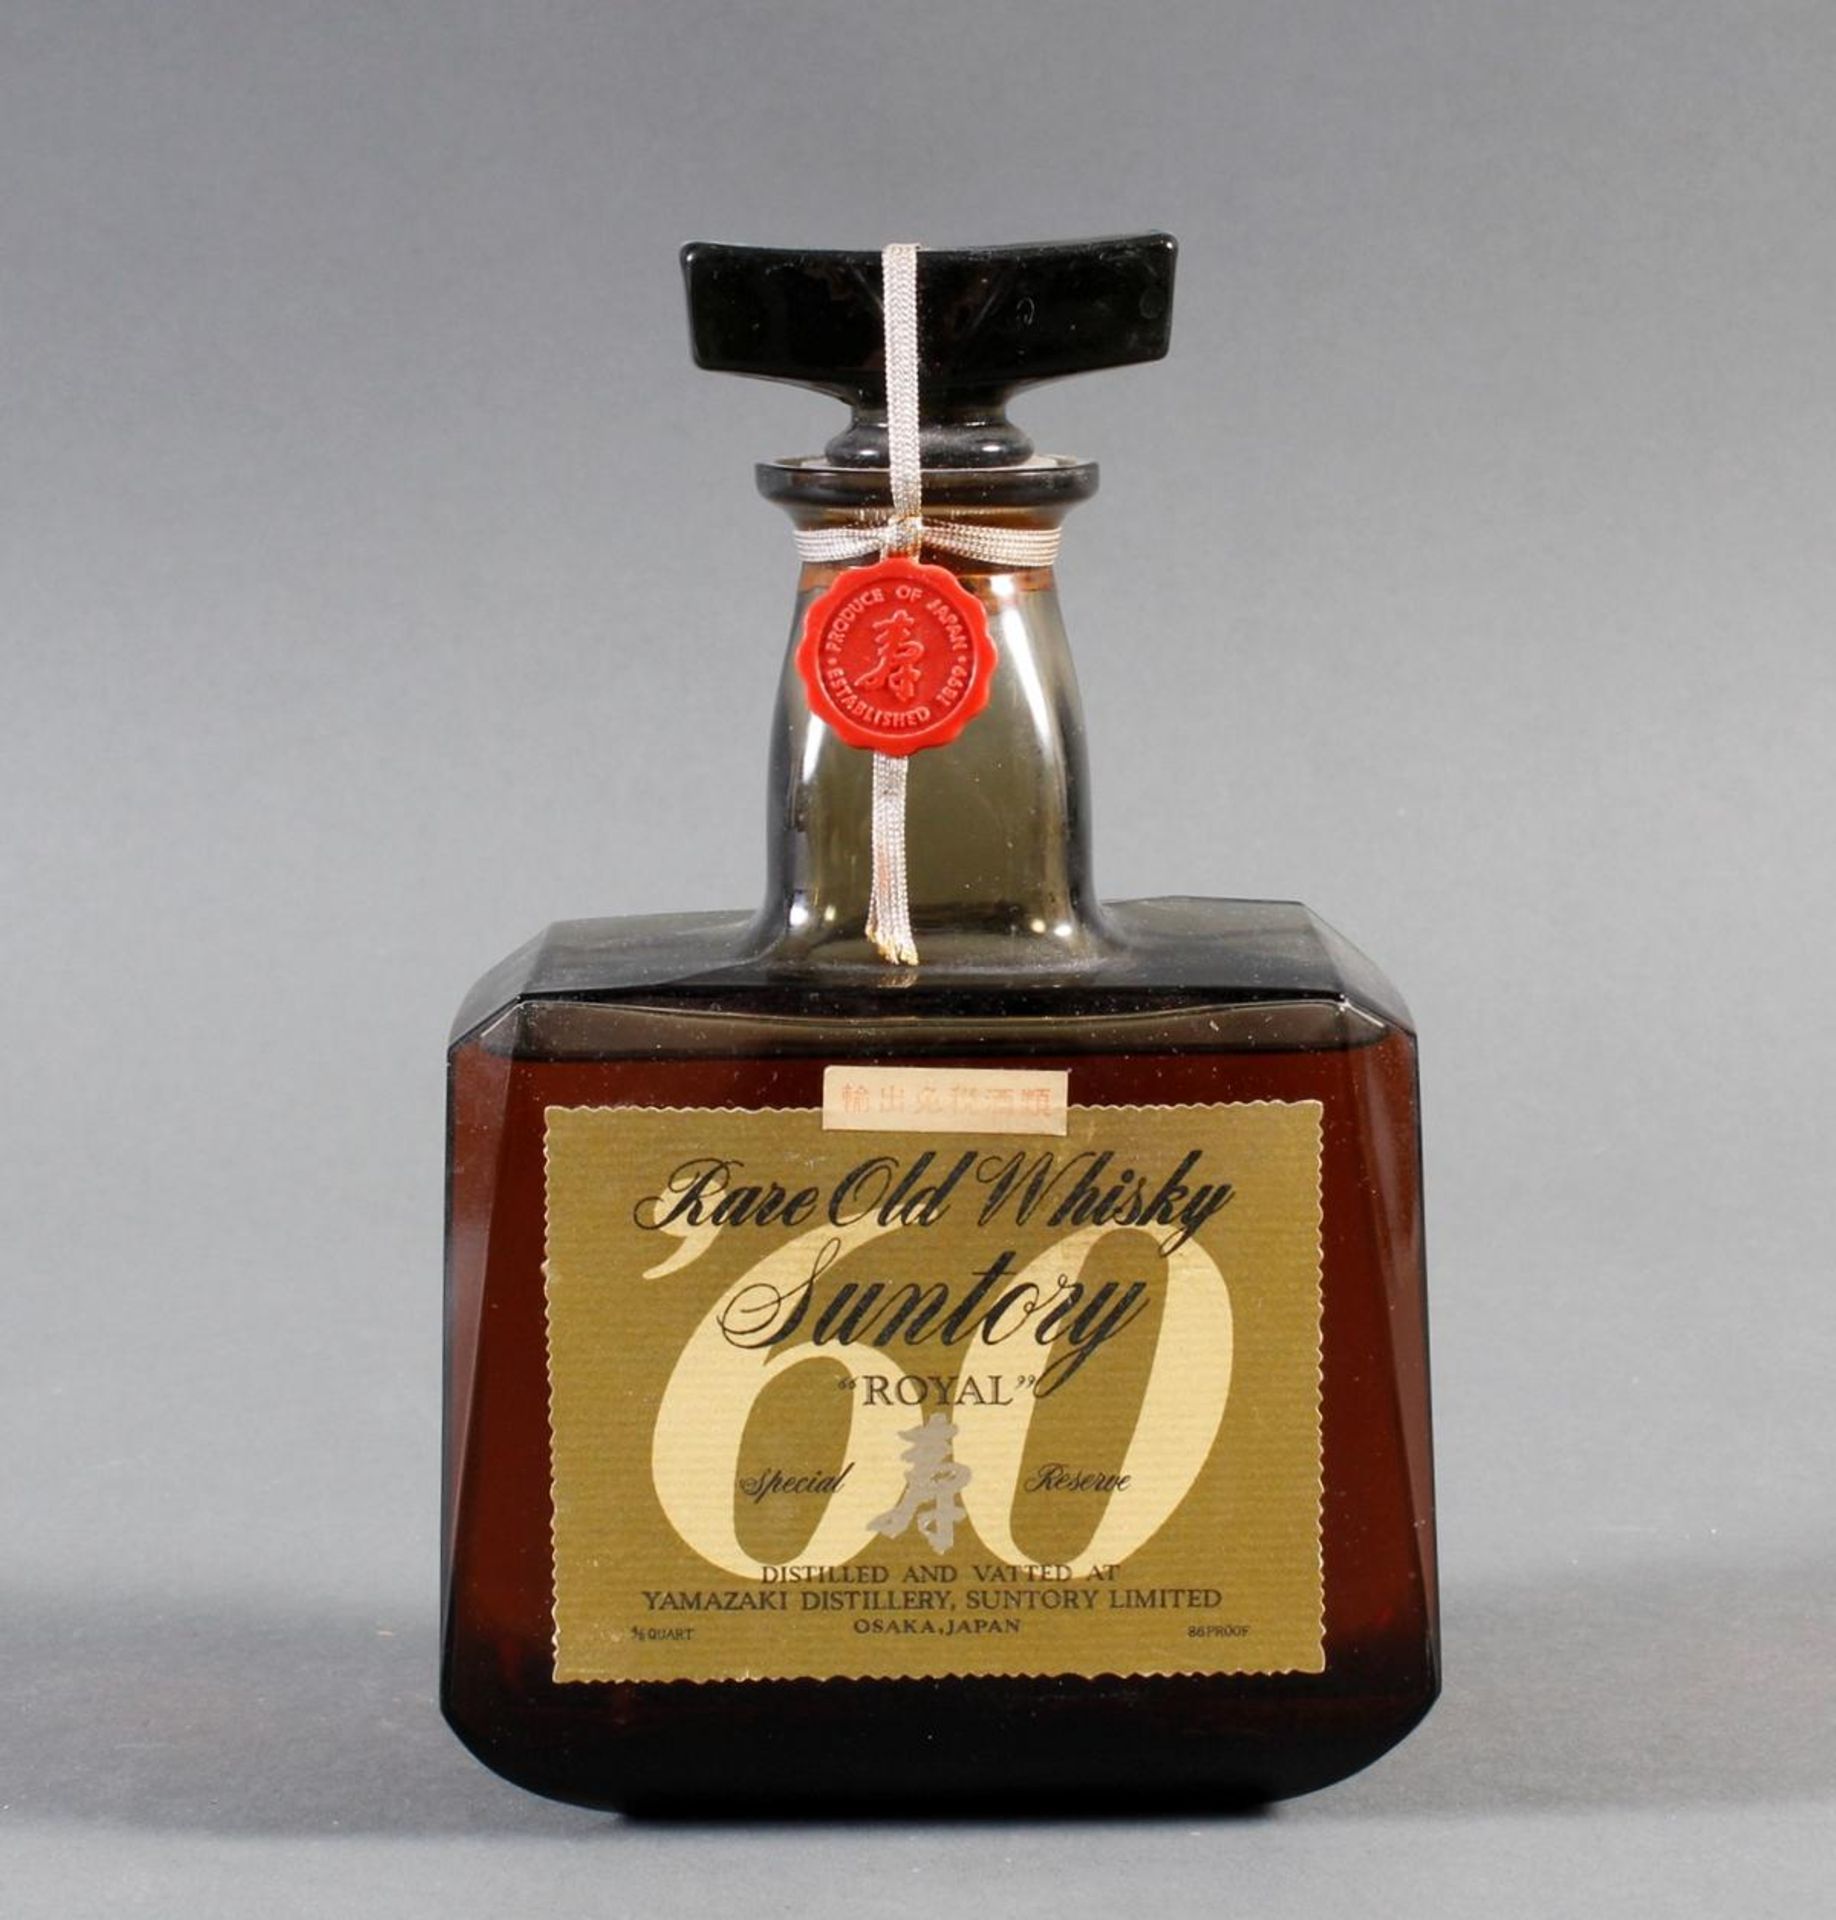 Rare Old Whisky Suntory Royal ´60 Special Reserve Yamazaki